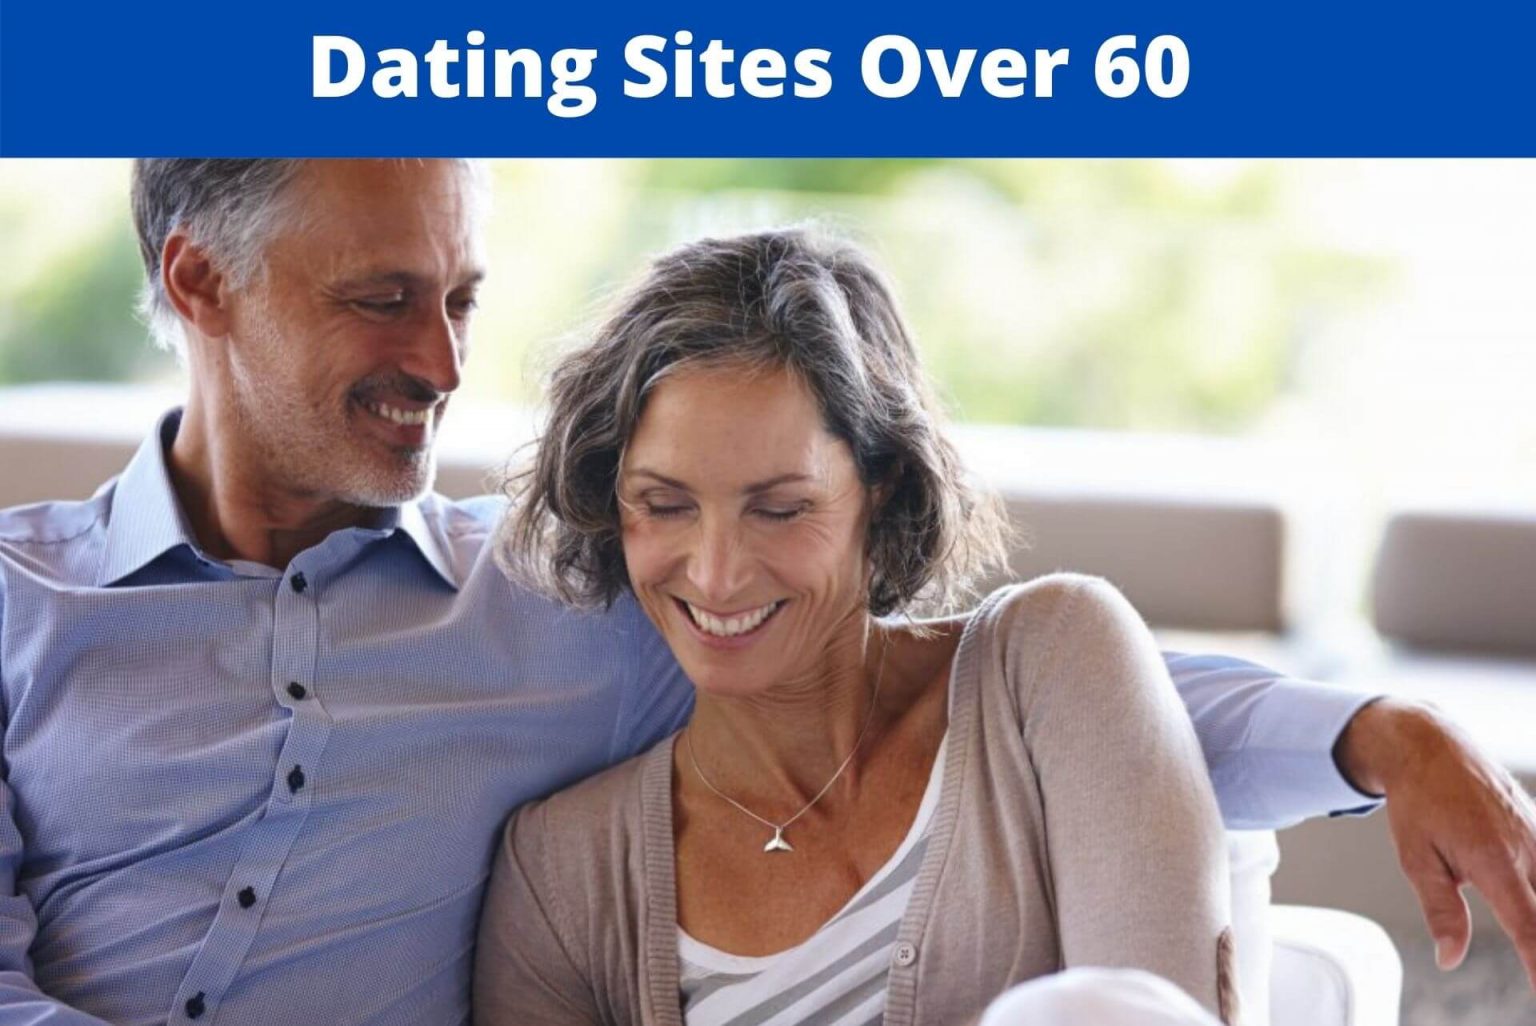 Senior adult dating site